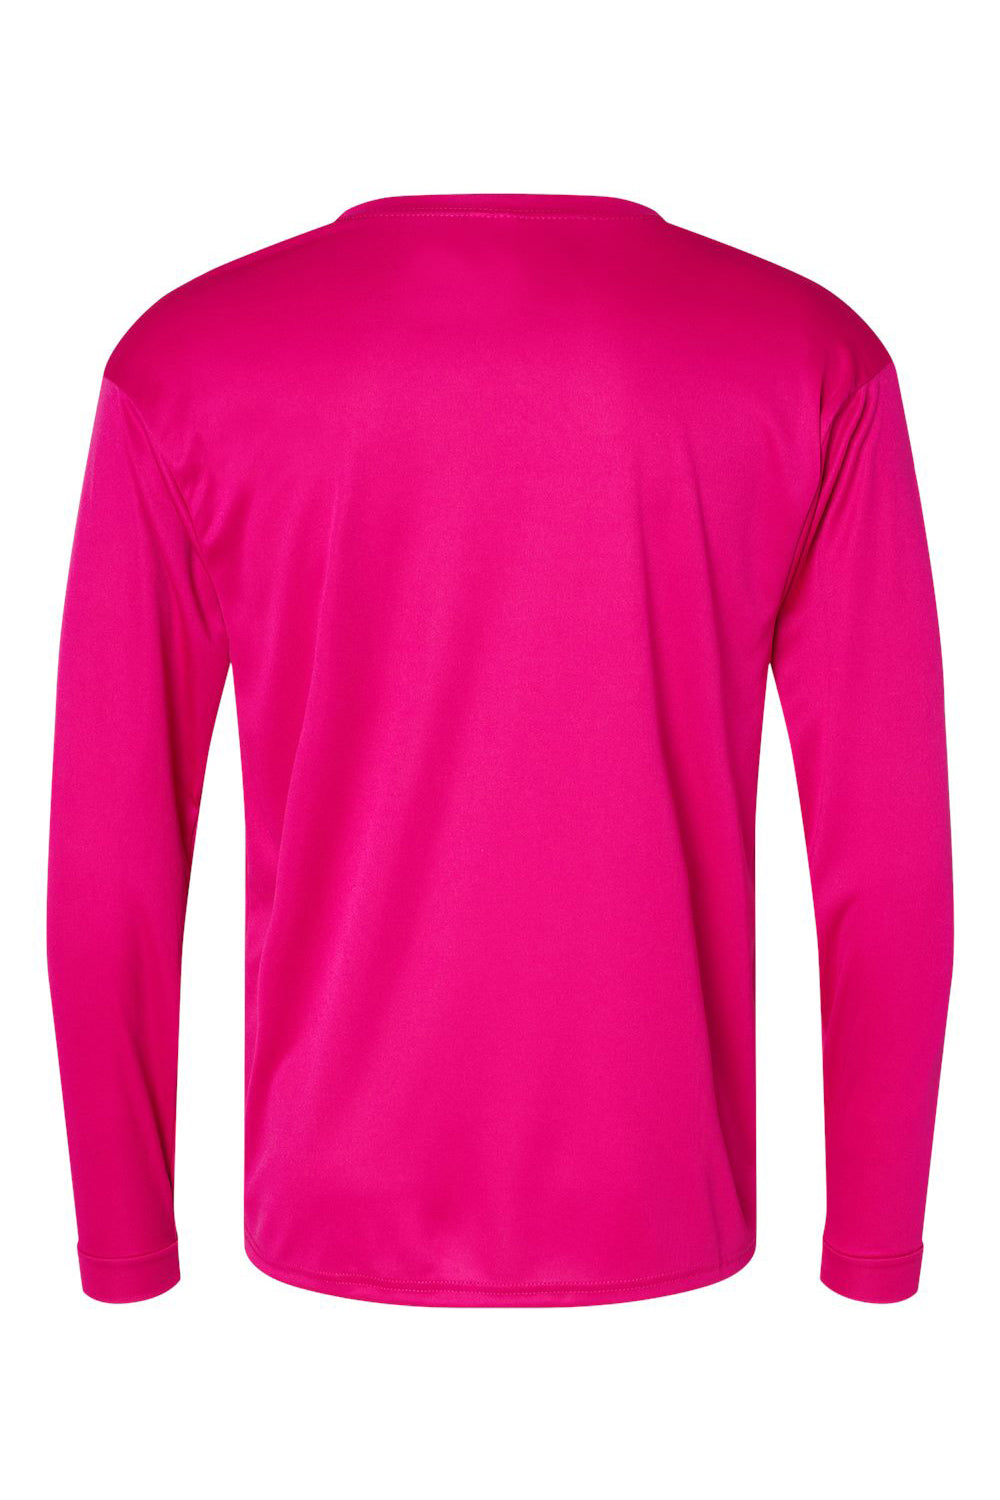 C2 Sport 5104 Mens Performance Moisture Wicking Long Sleeve Crewneck T-Shirt Hot Pink Flat Back